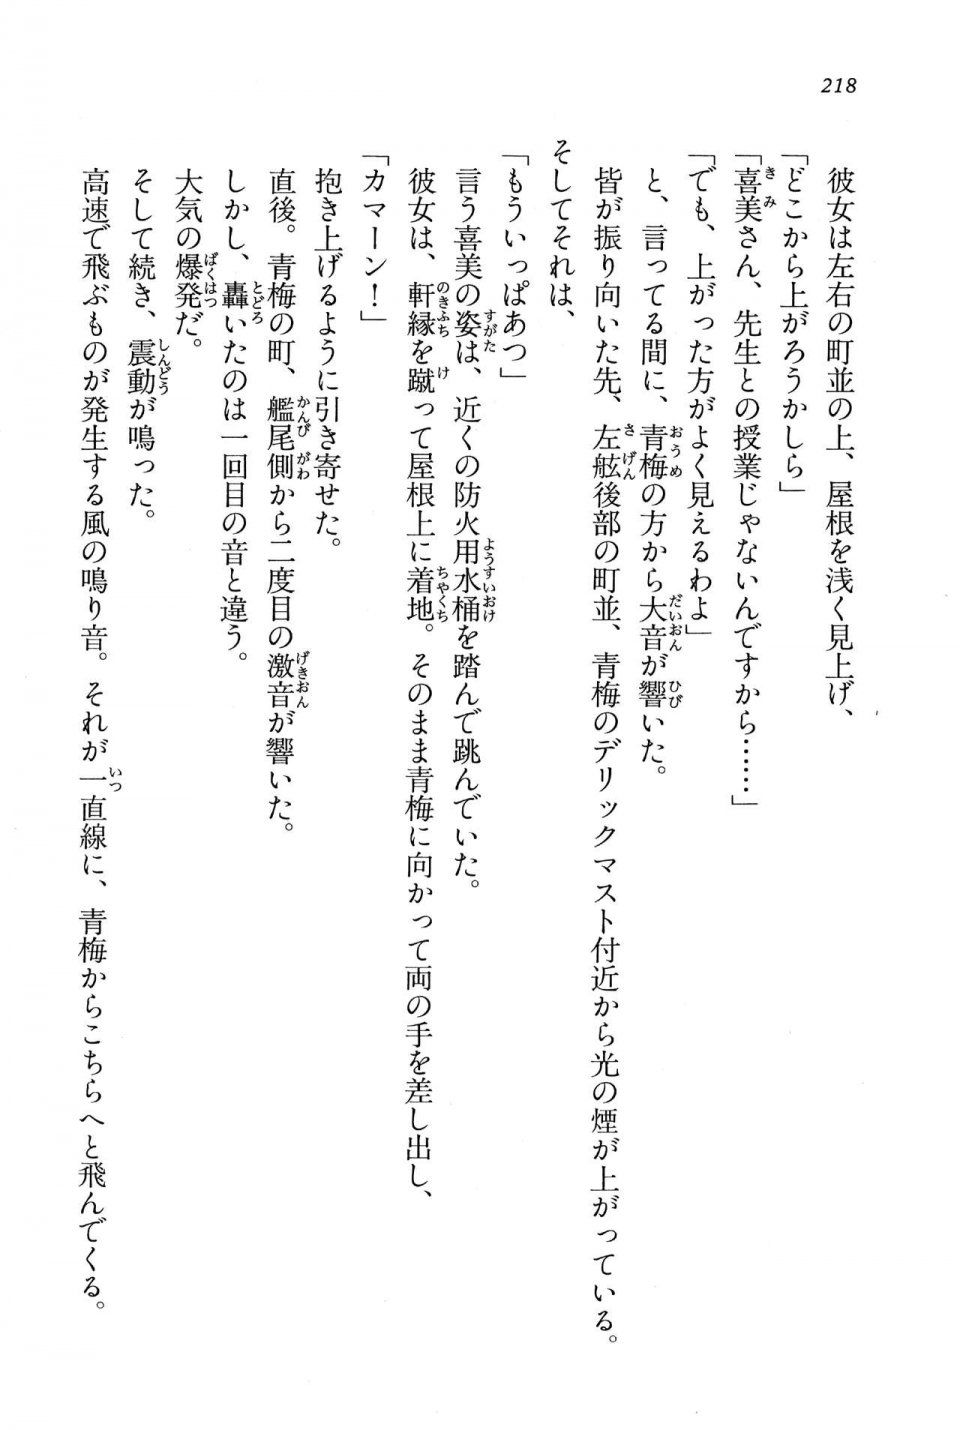 Kyoukai Senjou no Horizon BD Special Mininovel Vol 7(4A) - Photo #222